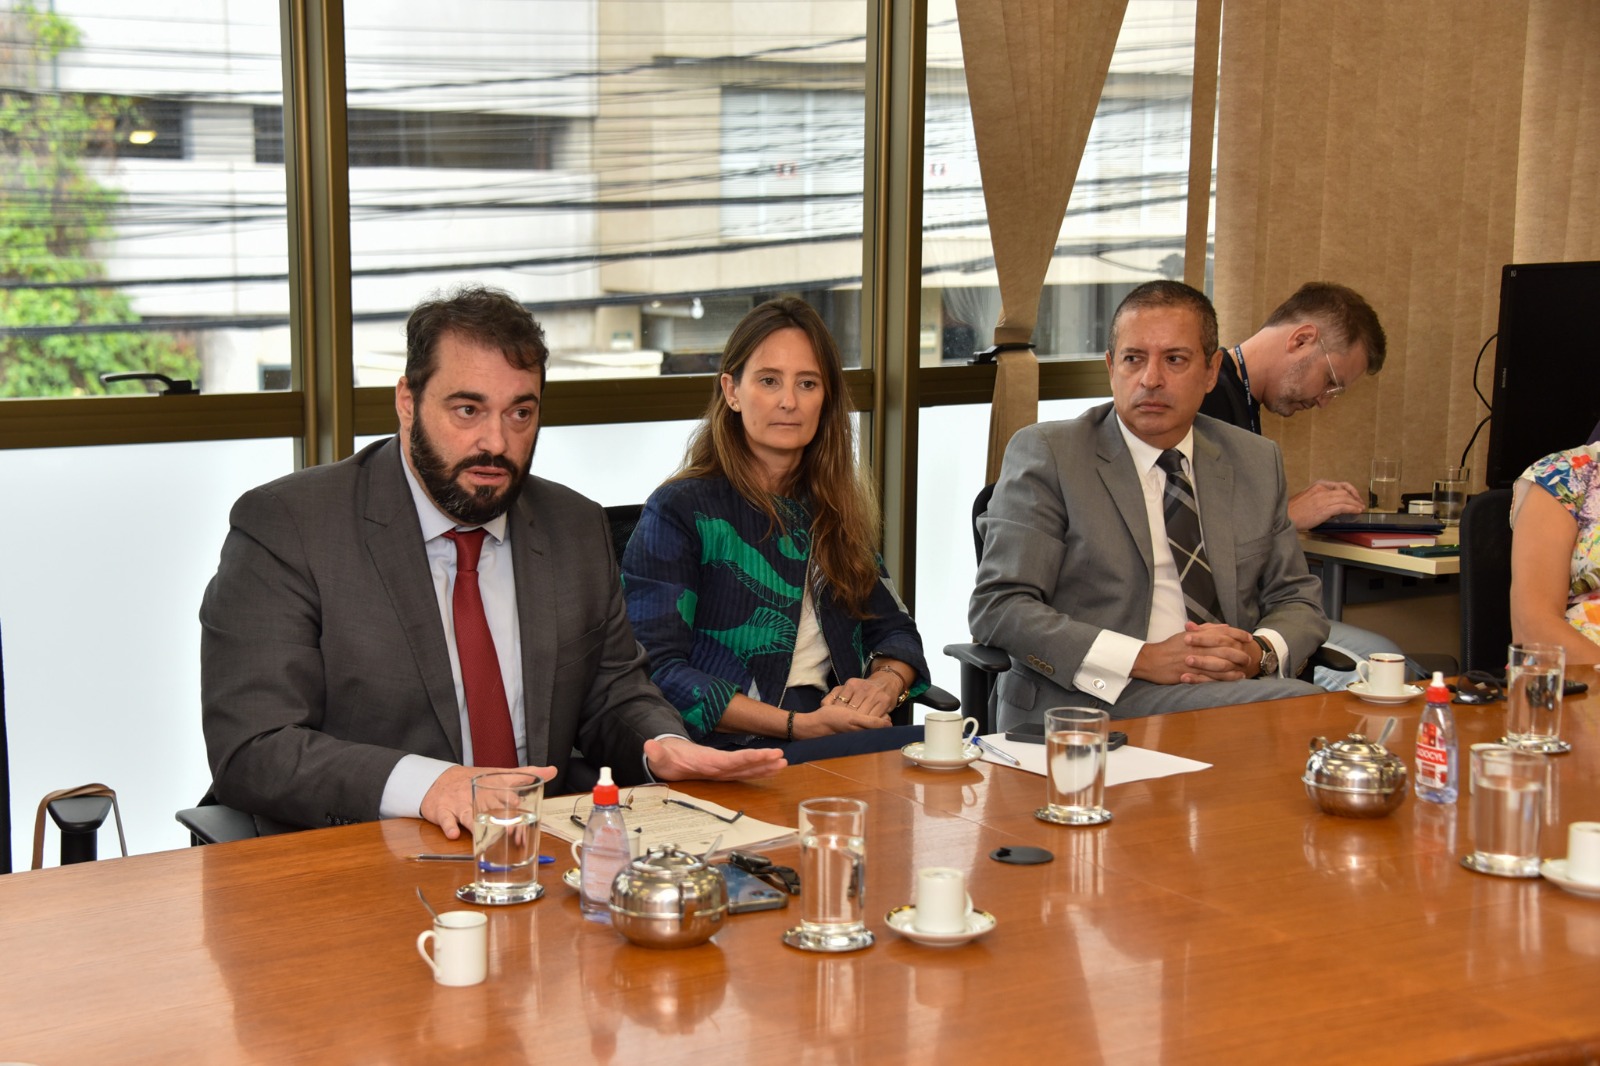 Foto des. Alexandre, juíza Luciana e procurador Marcelo.jfif